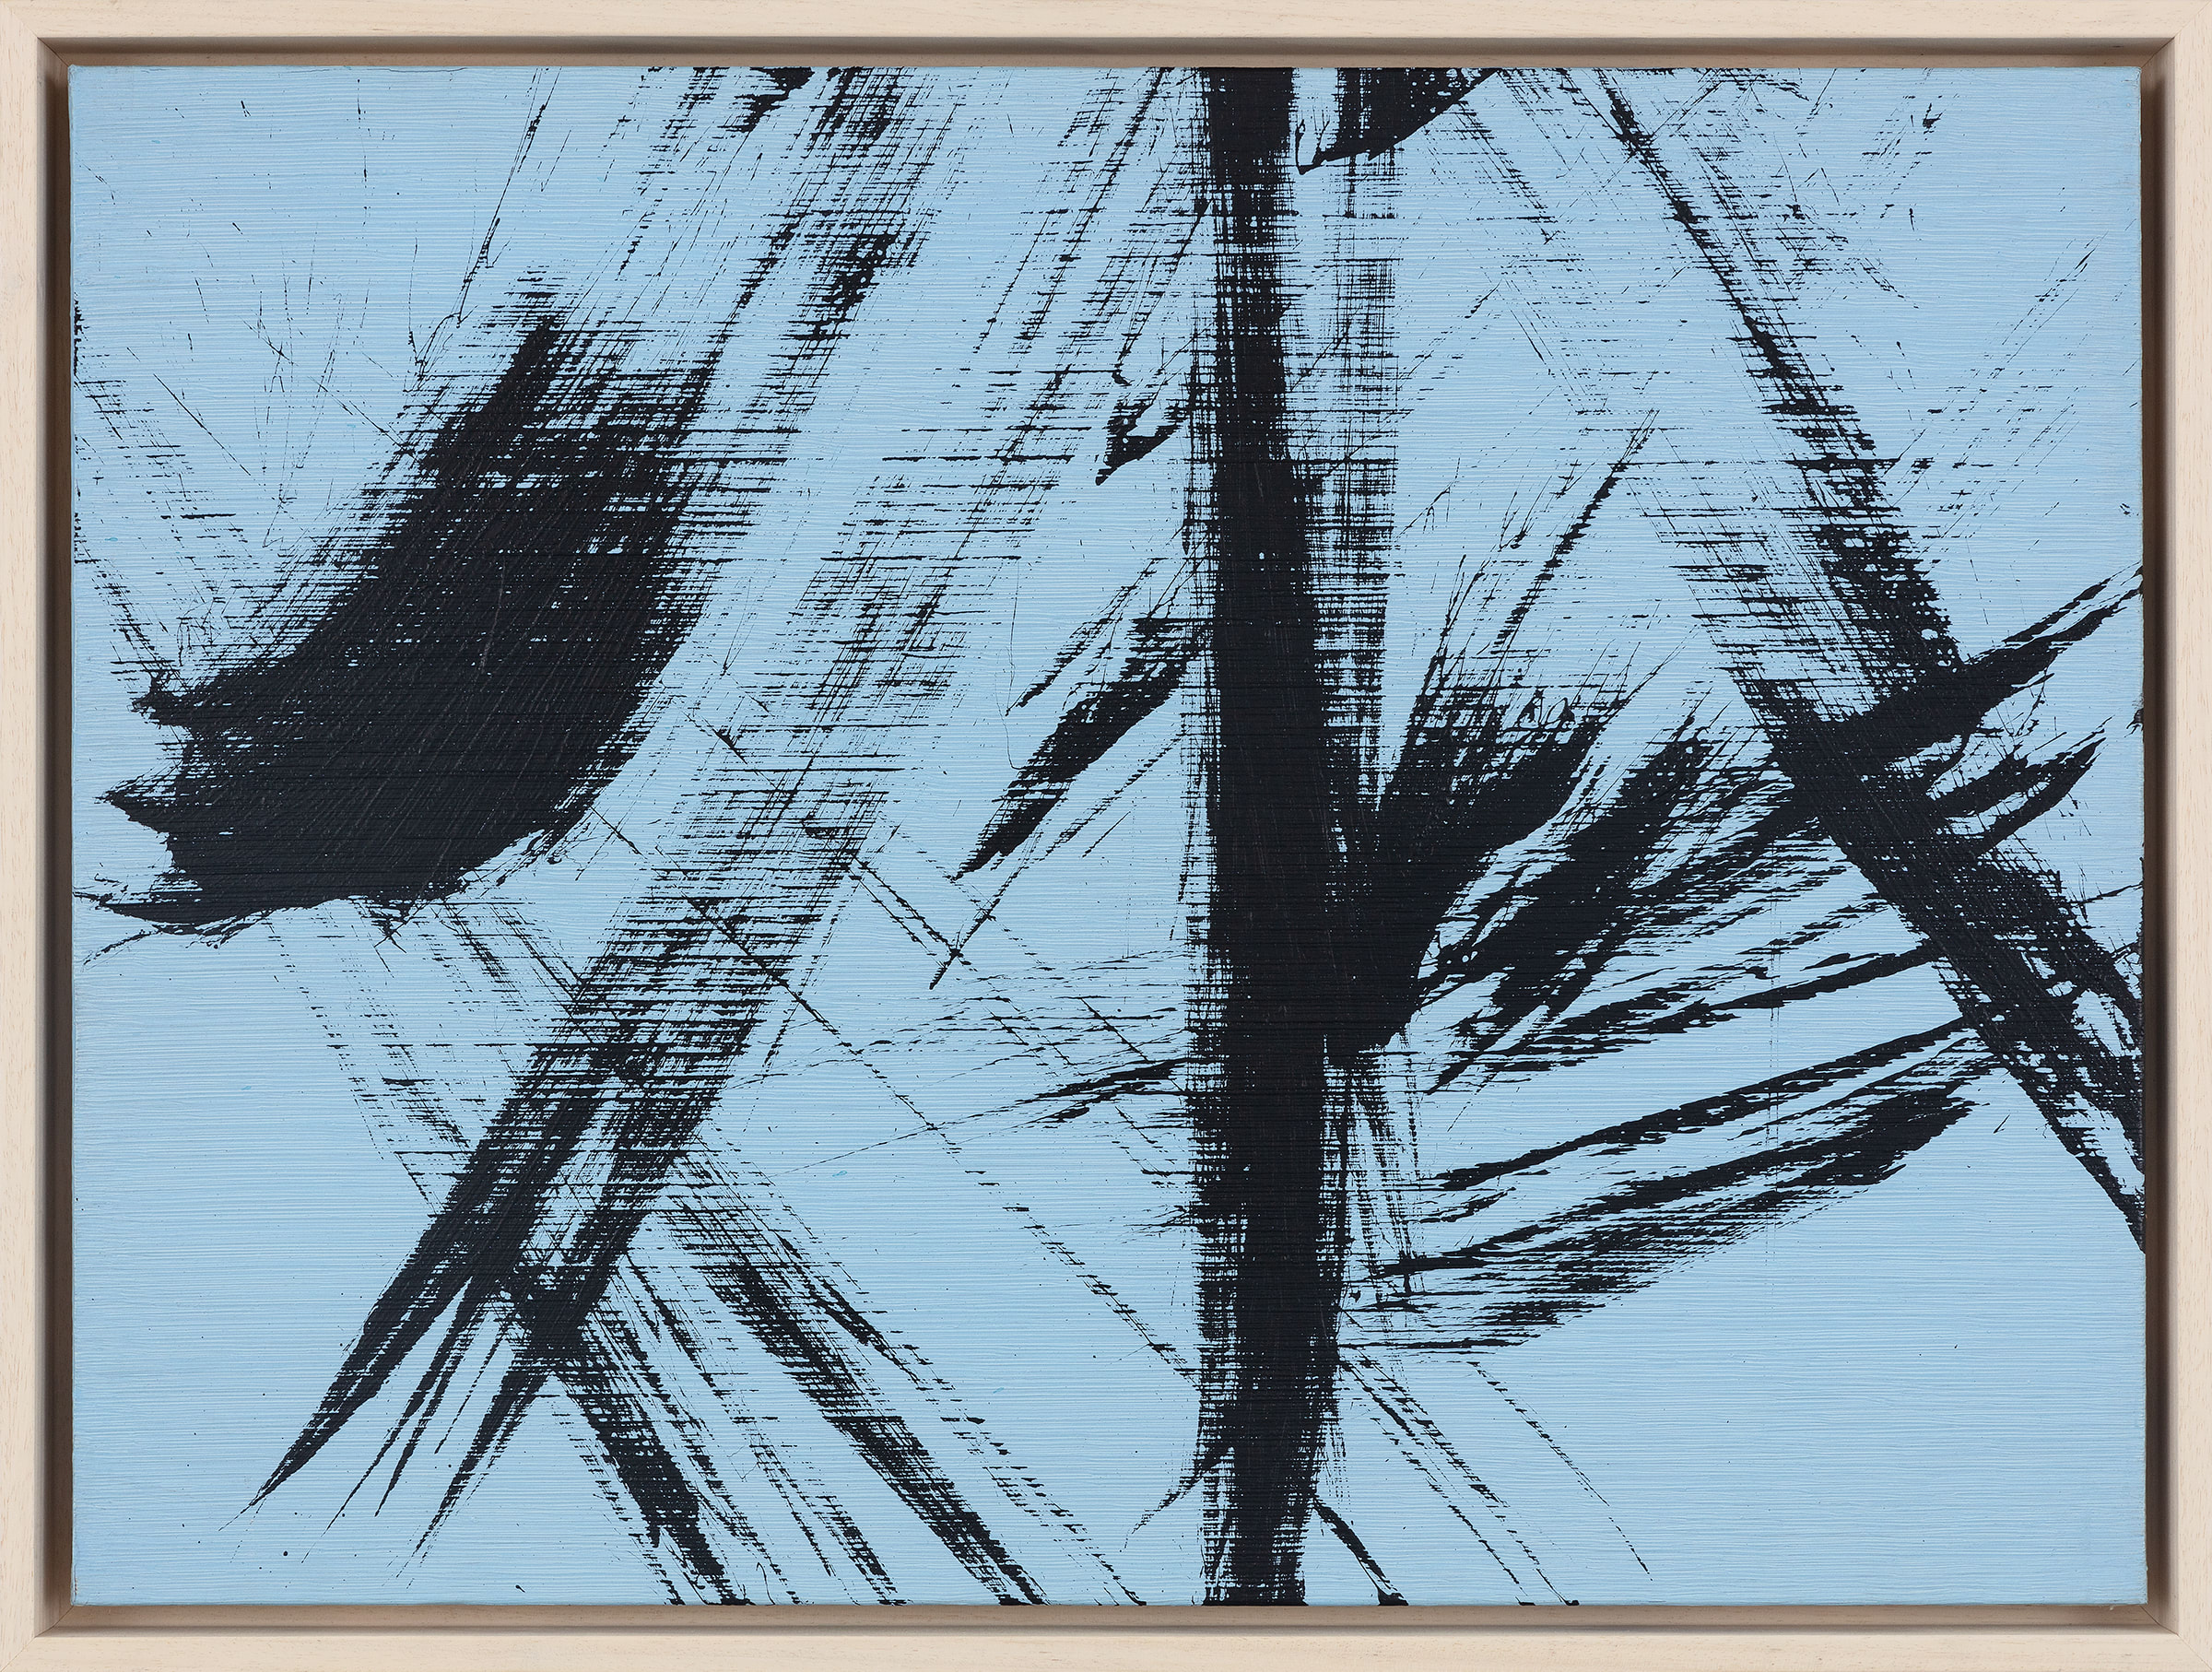 Hans Hartung T 1982 - R 17, 1982, Acrylic on canvas, Edition Unique, 60.0 x 81.0 (cm) - 23.6 x 31.9 (in), USD 100,001 – 200,000, @ Perrotin